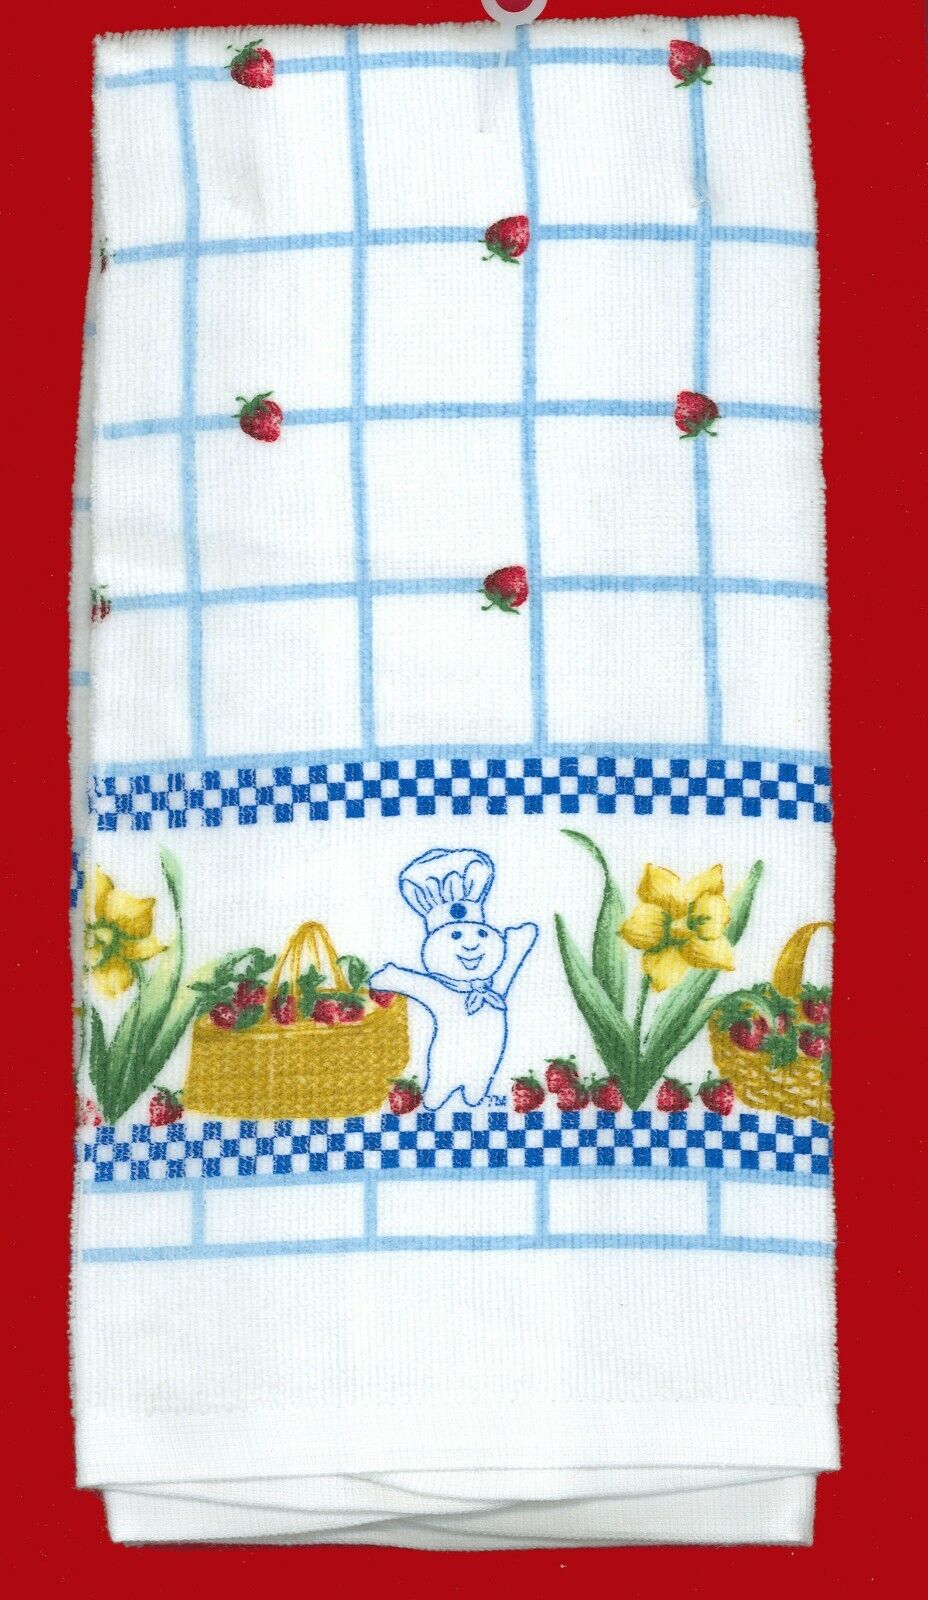 FS NWOT Pillsbury Doughboy with RED STRAWBERRIES TOWEL - BEST BRANDS 2005